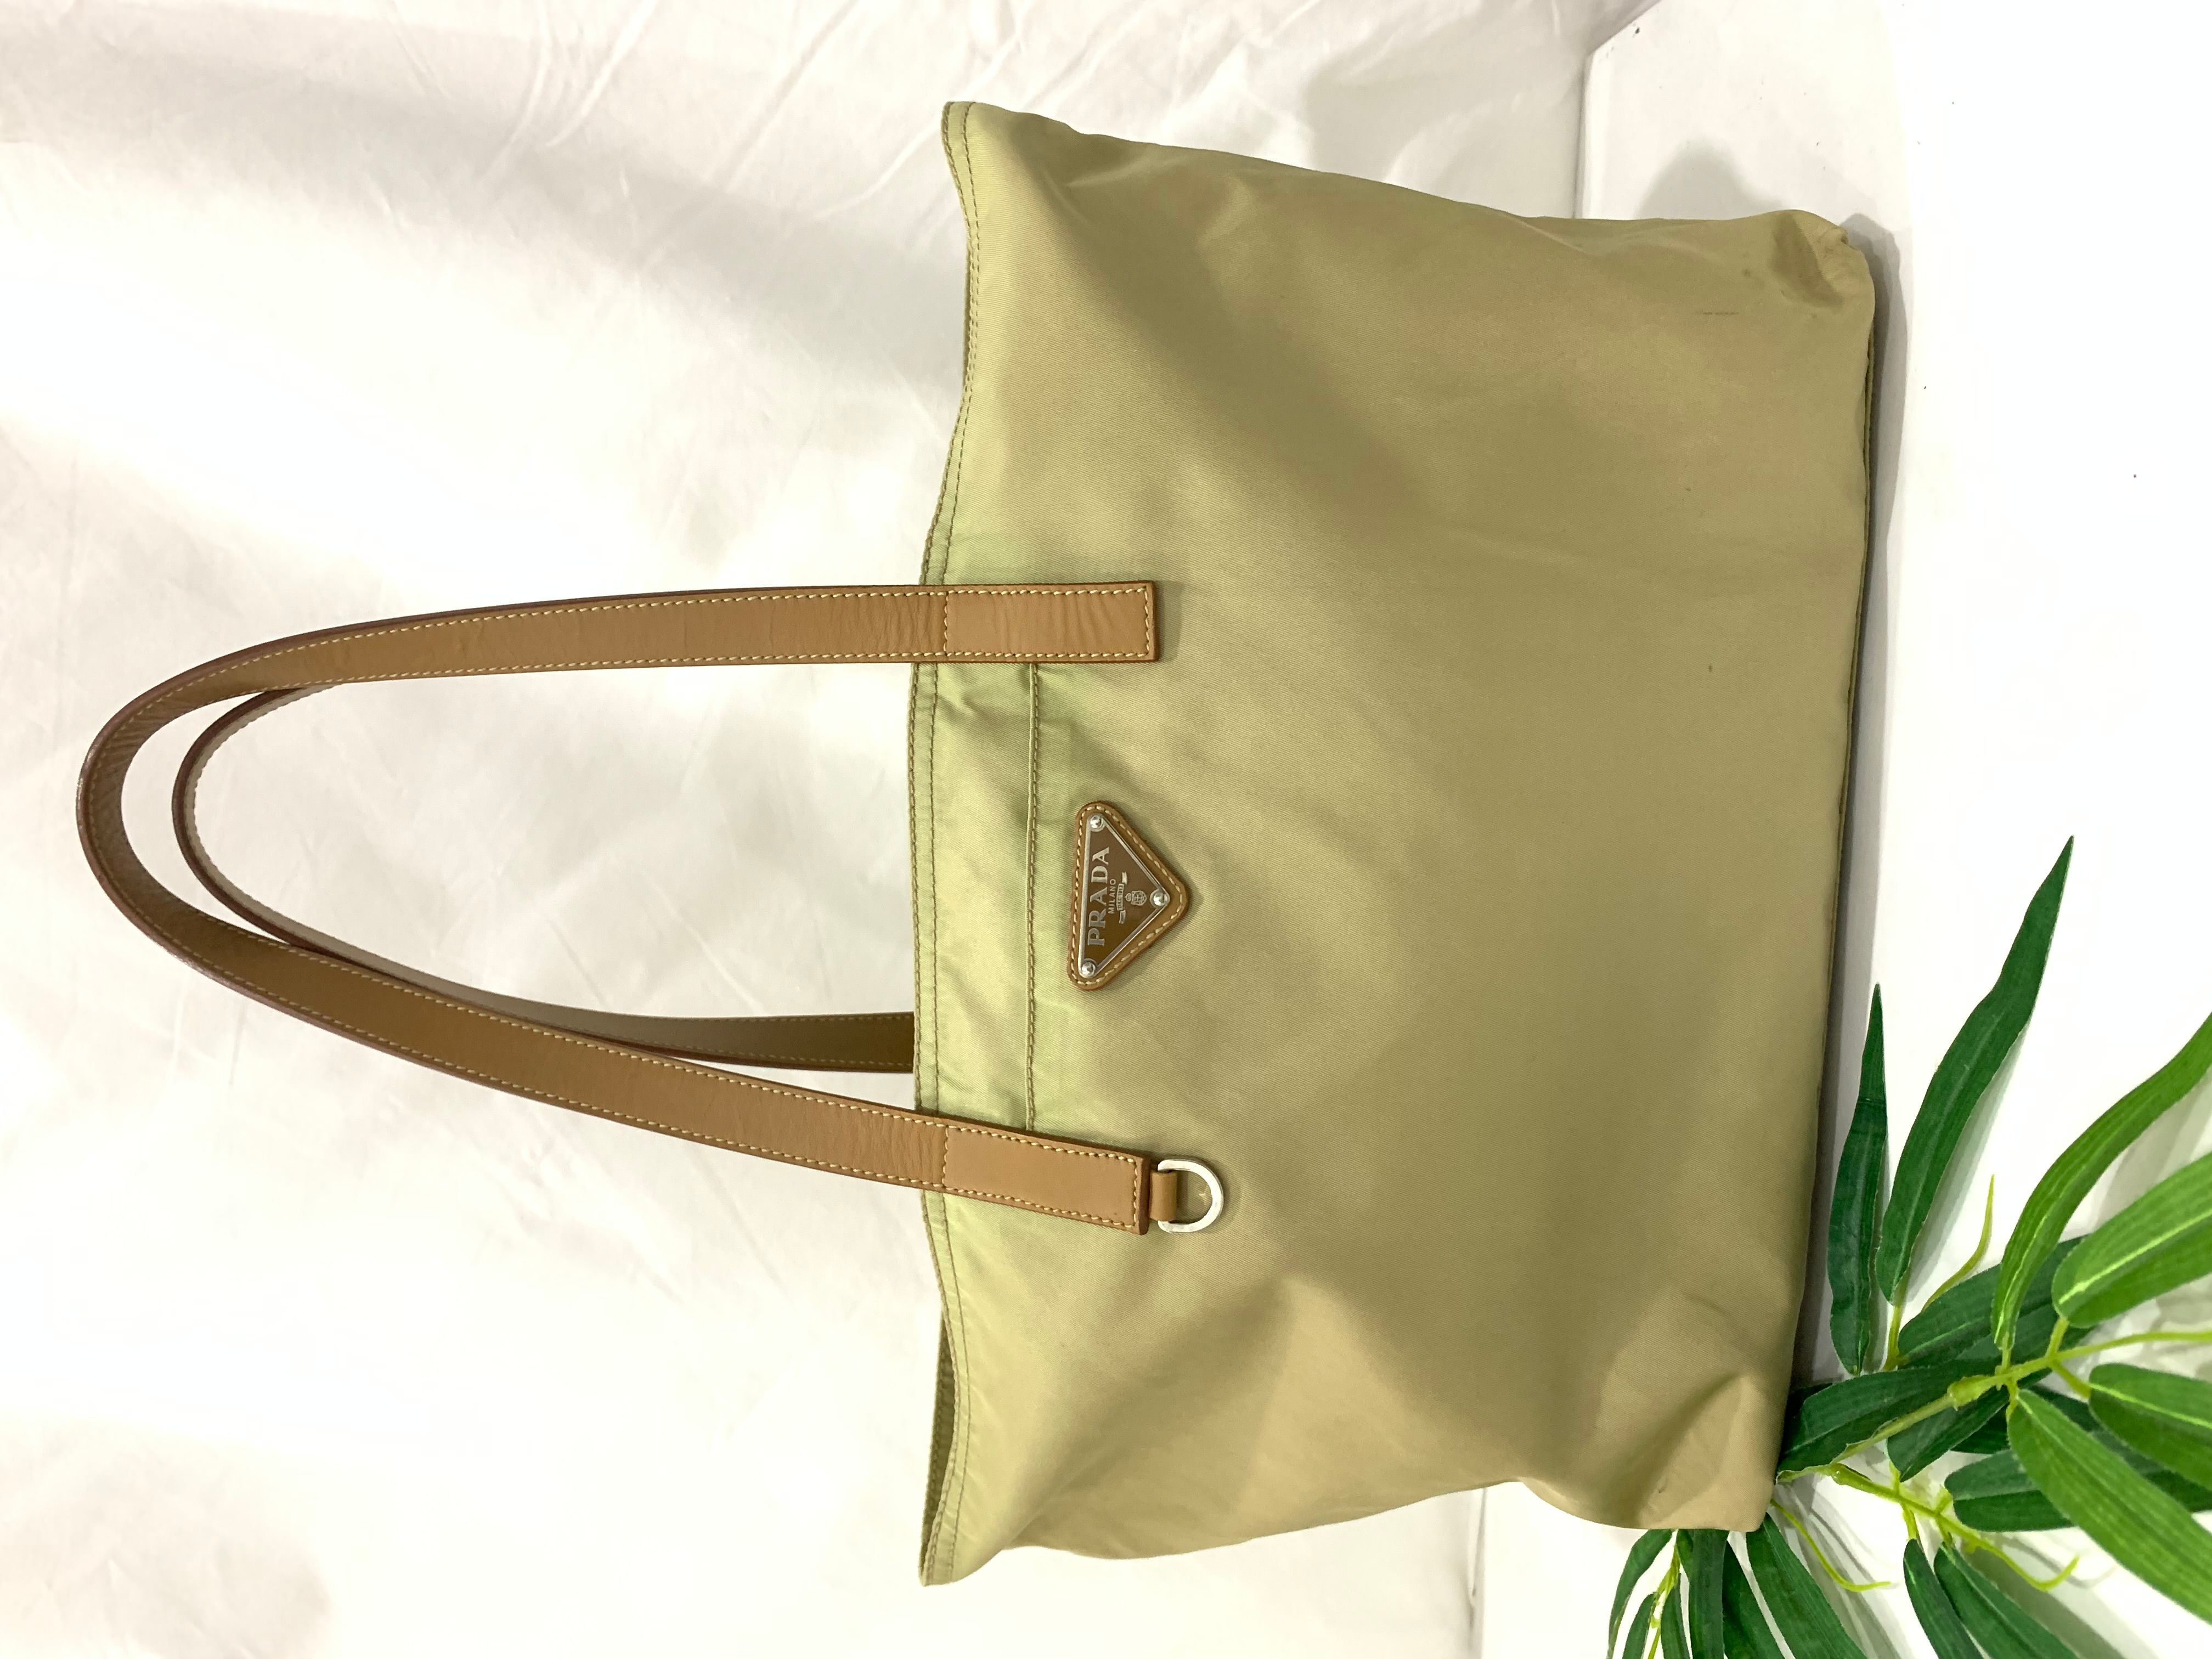 Authentic prada nylon shoulder bag - 2